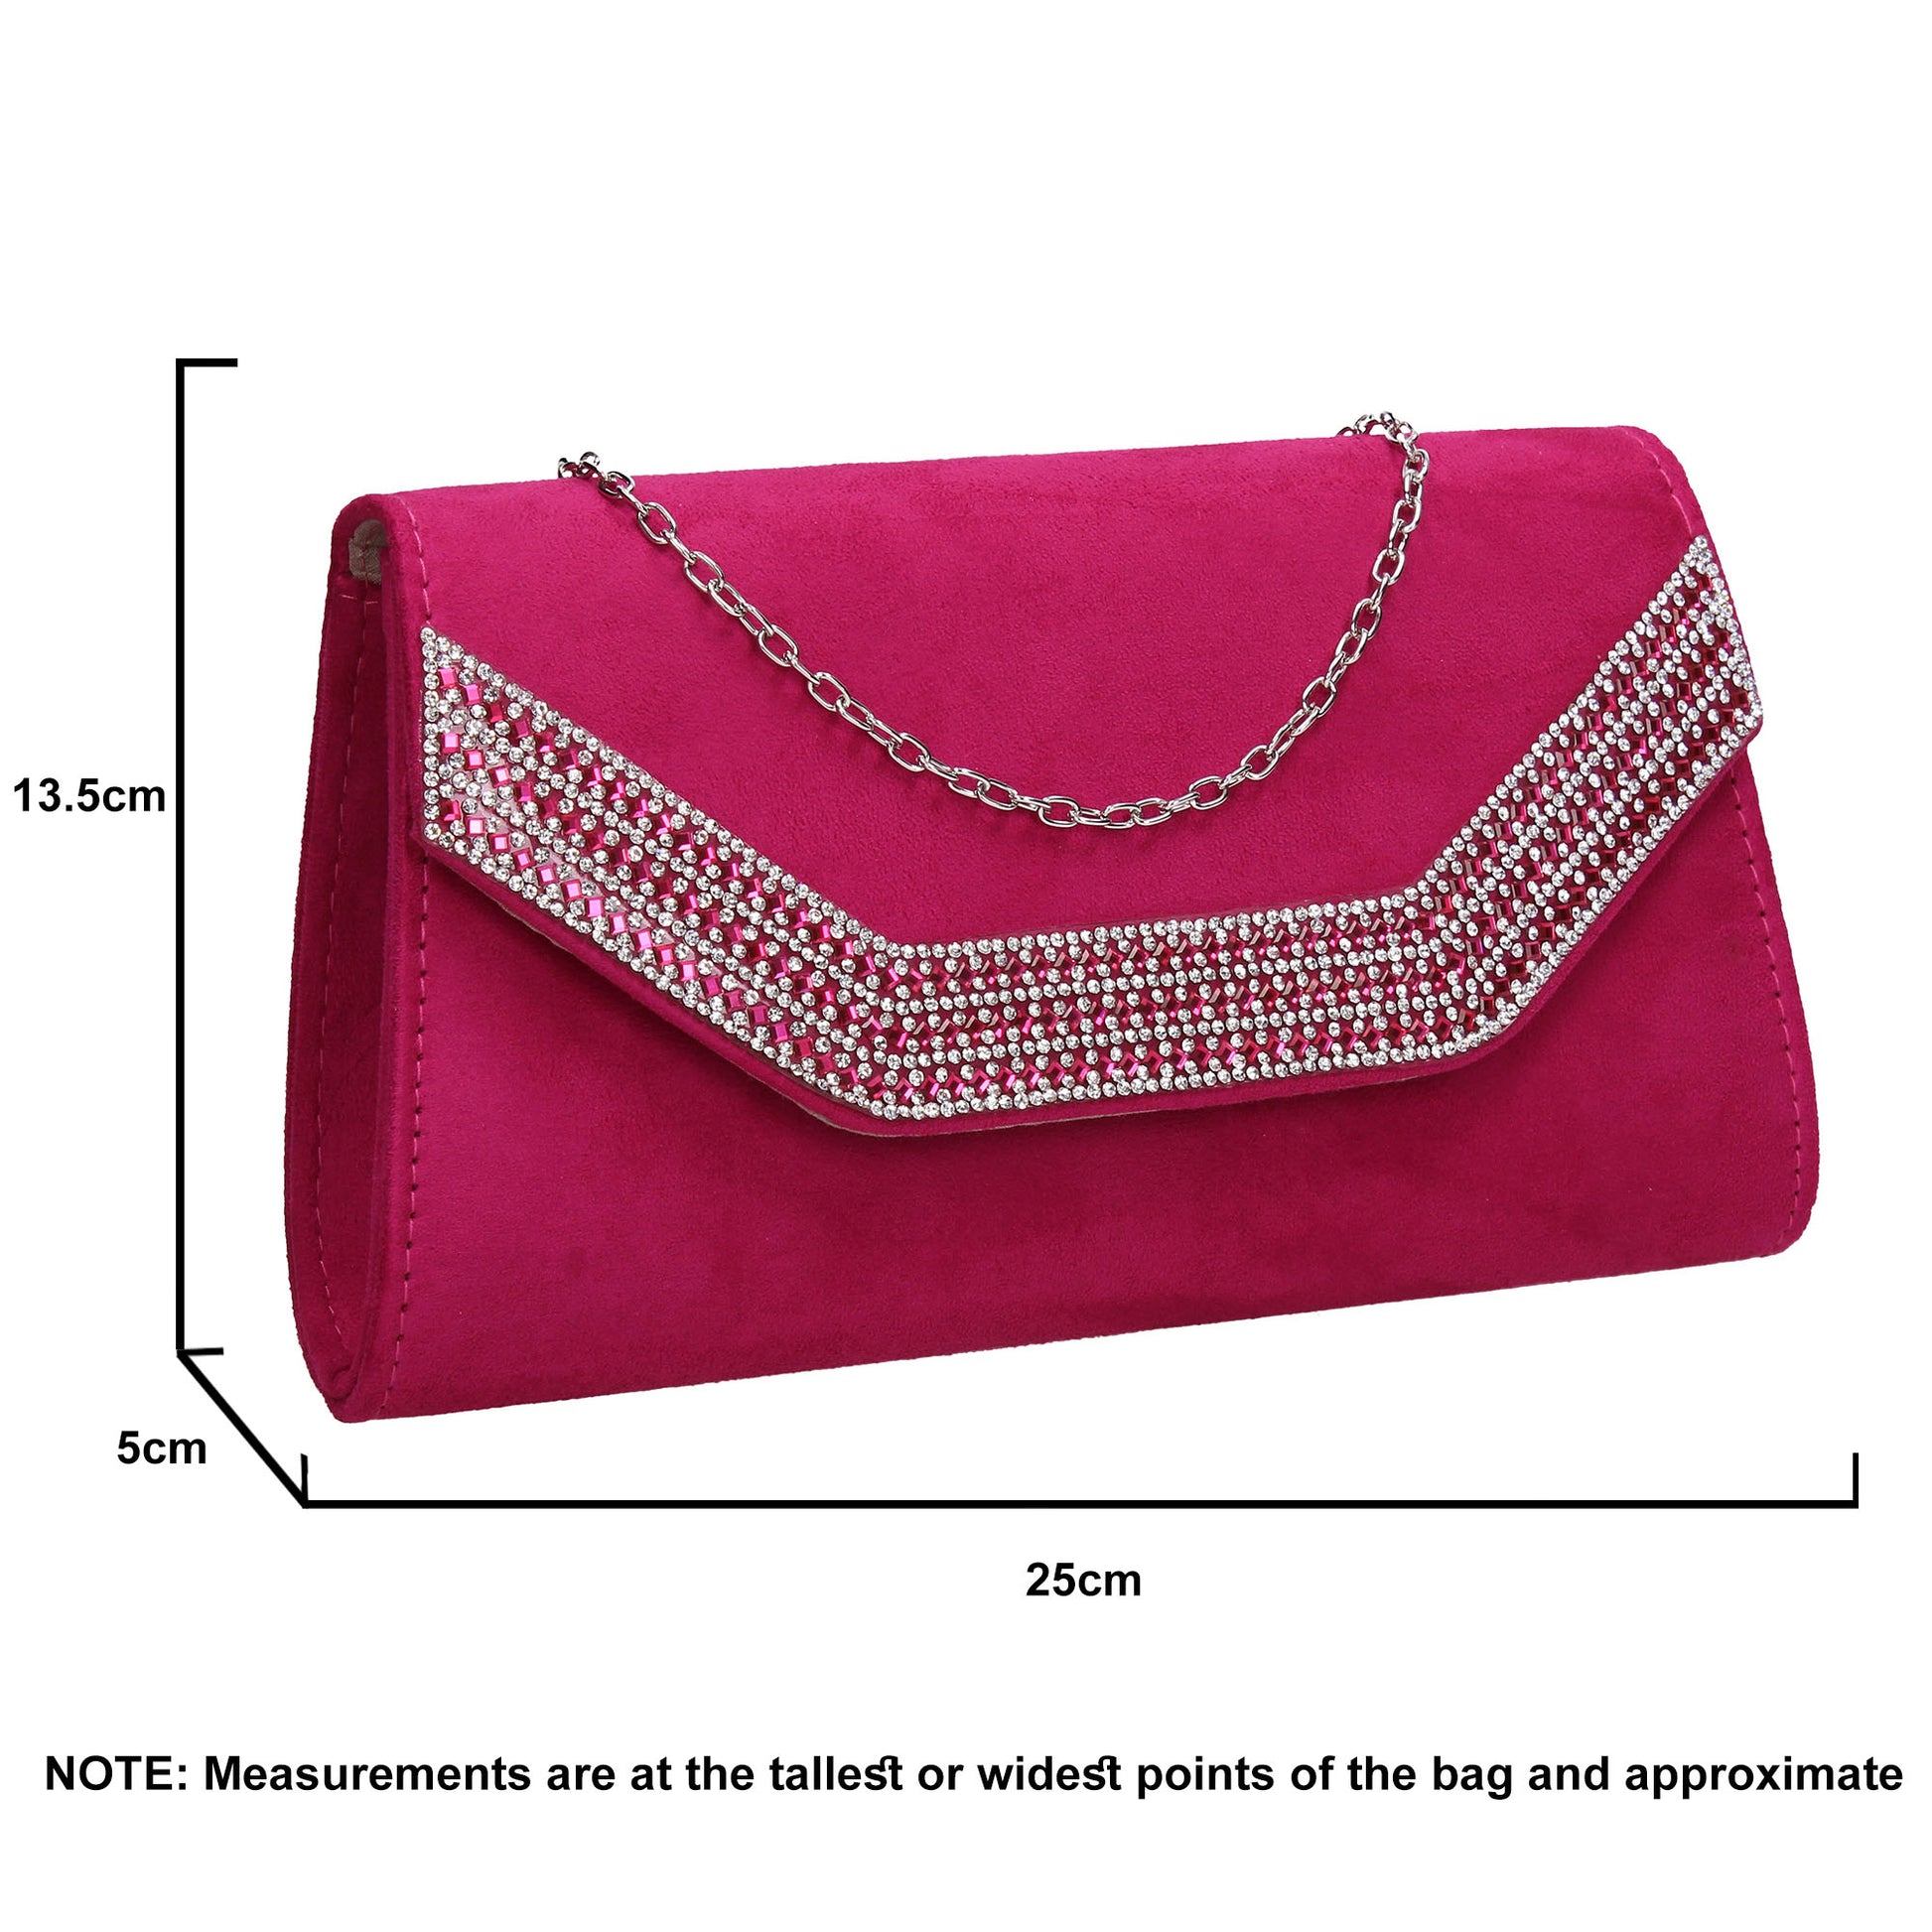 SWANKYSWANS Harper Clutch Bag Fuchsia Pink Cute Cheap Clutch Bag For Weddings School and Work